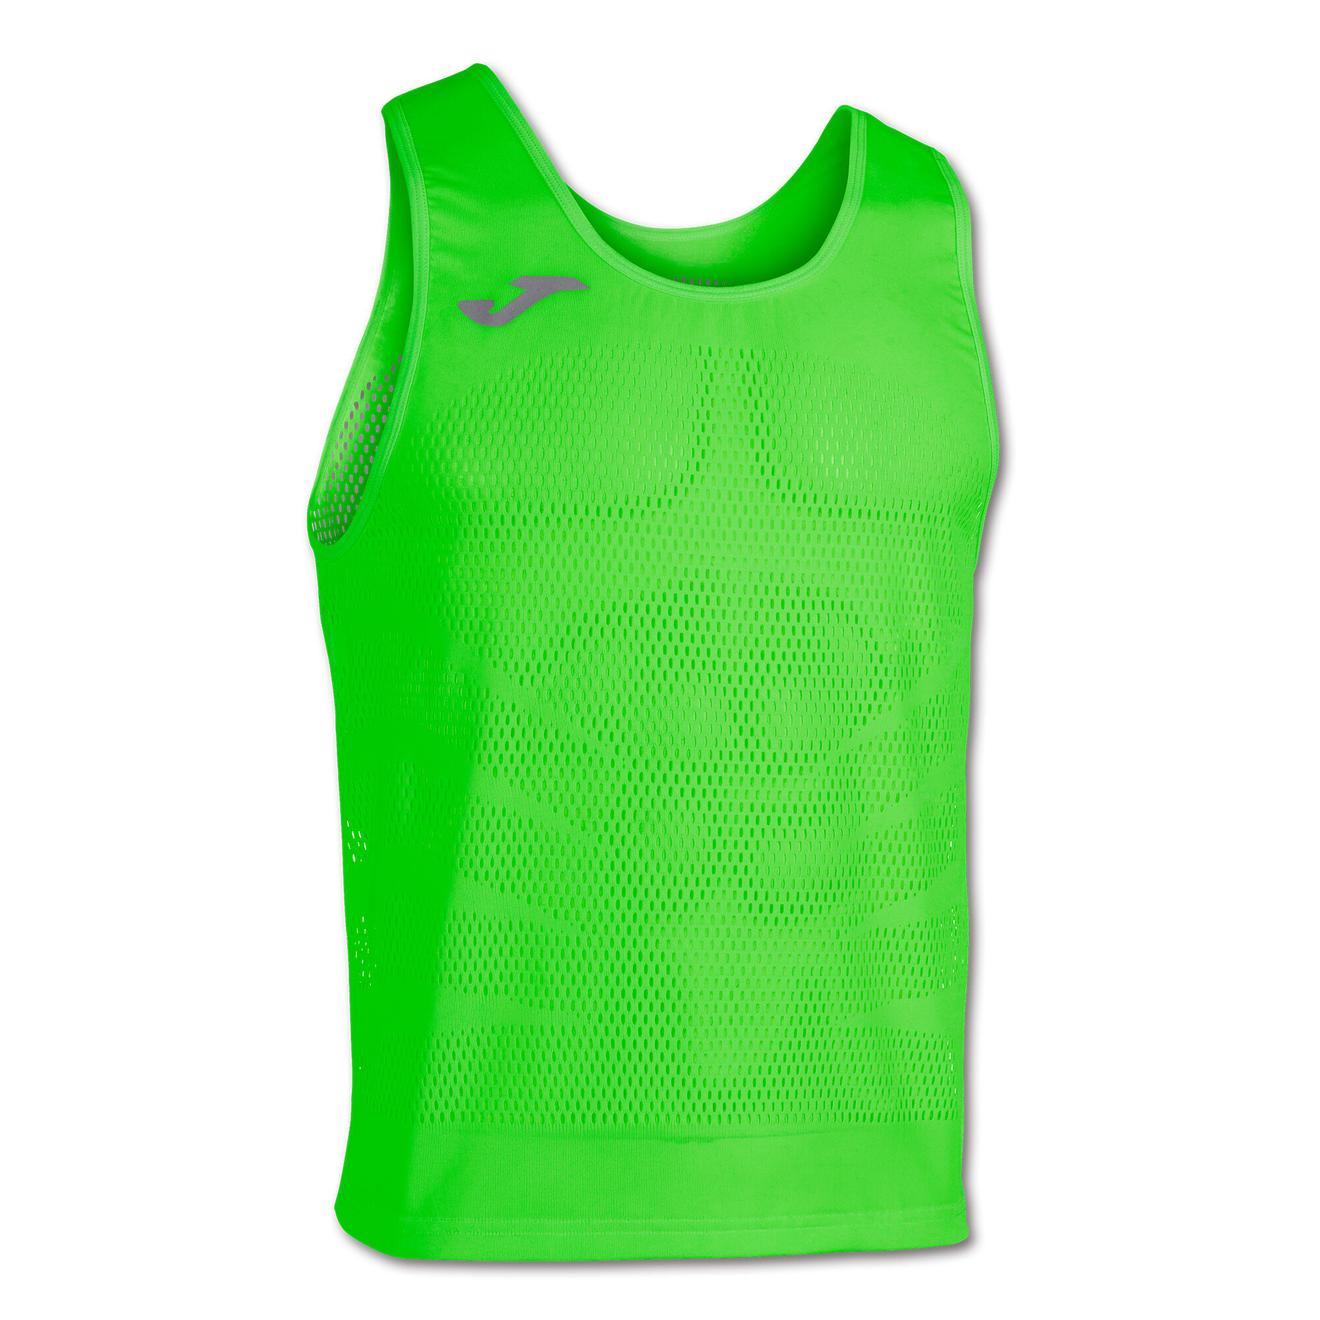 Oferta de Camiseta tirantes hombre Marathon verde flúor por 7,95€ en Joma